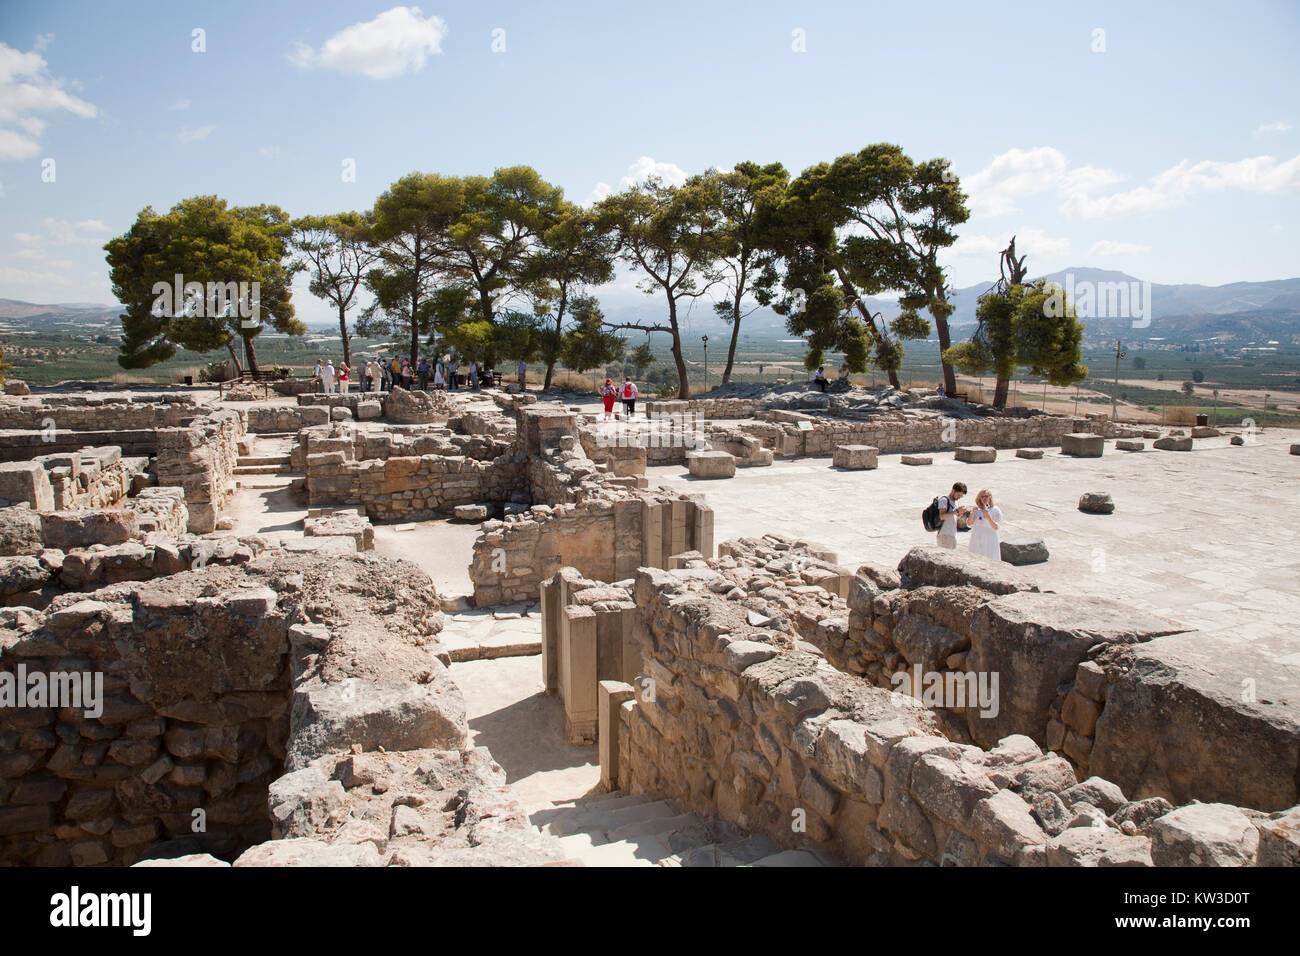 Central courtyard and area, Festos, archeological area, Crete island, Greece, Europe Stock Photo